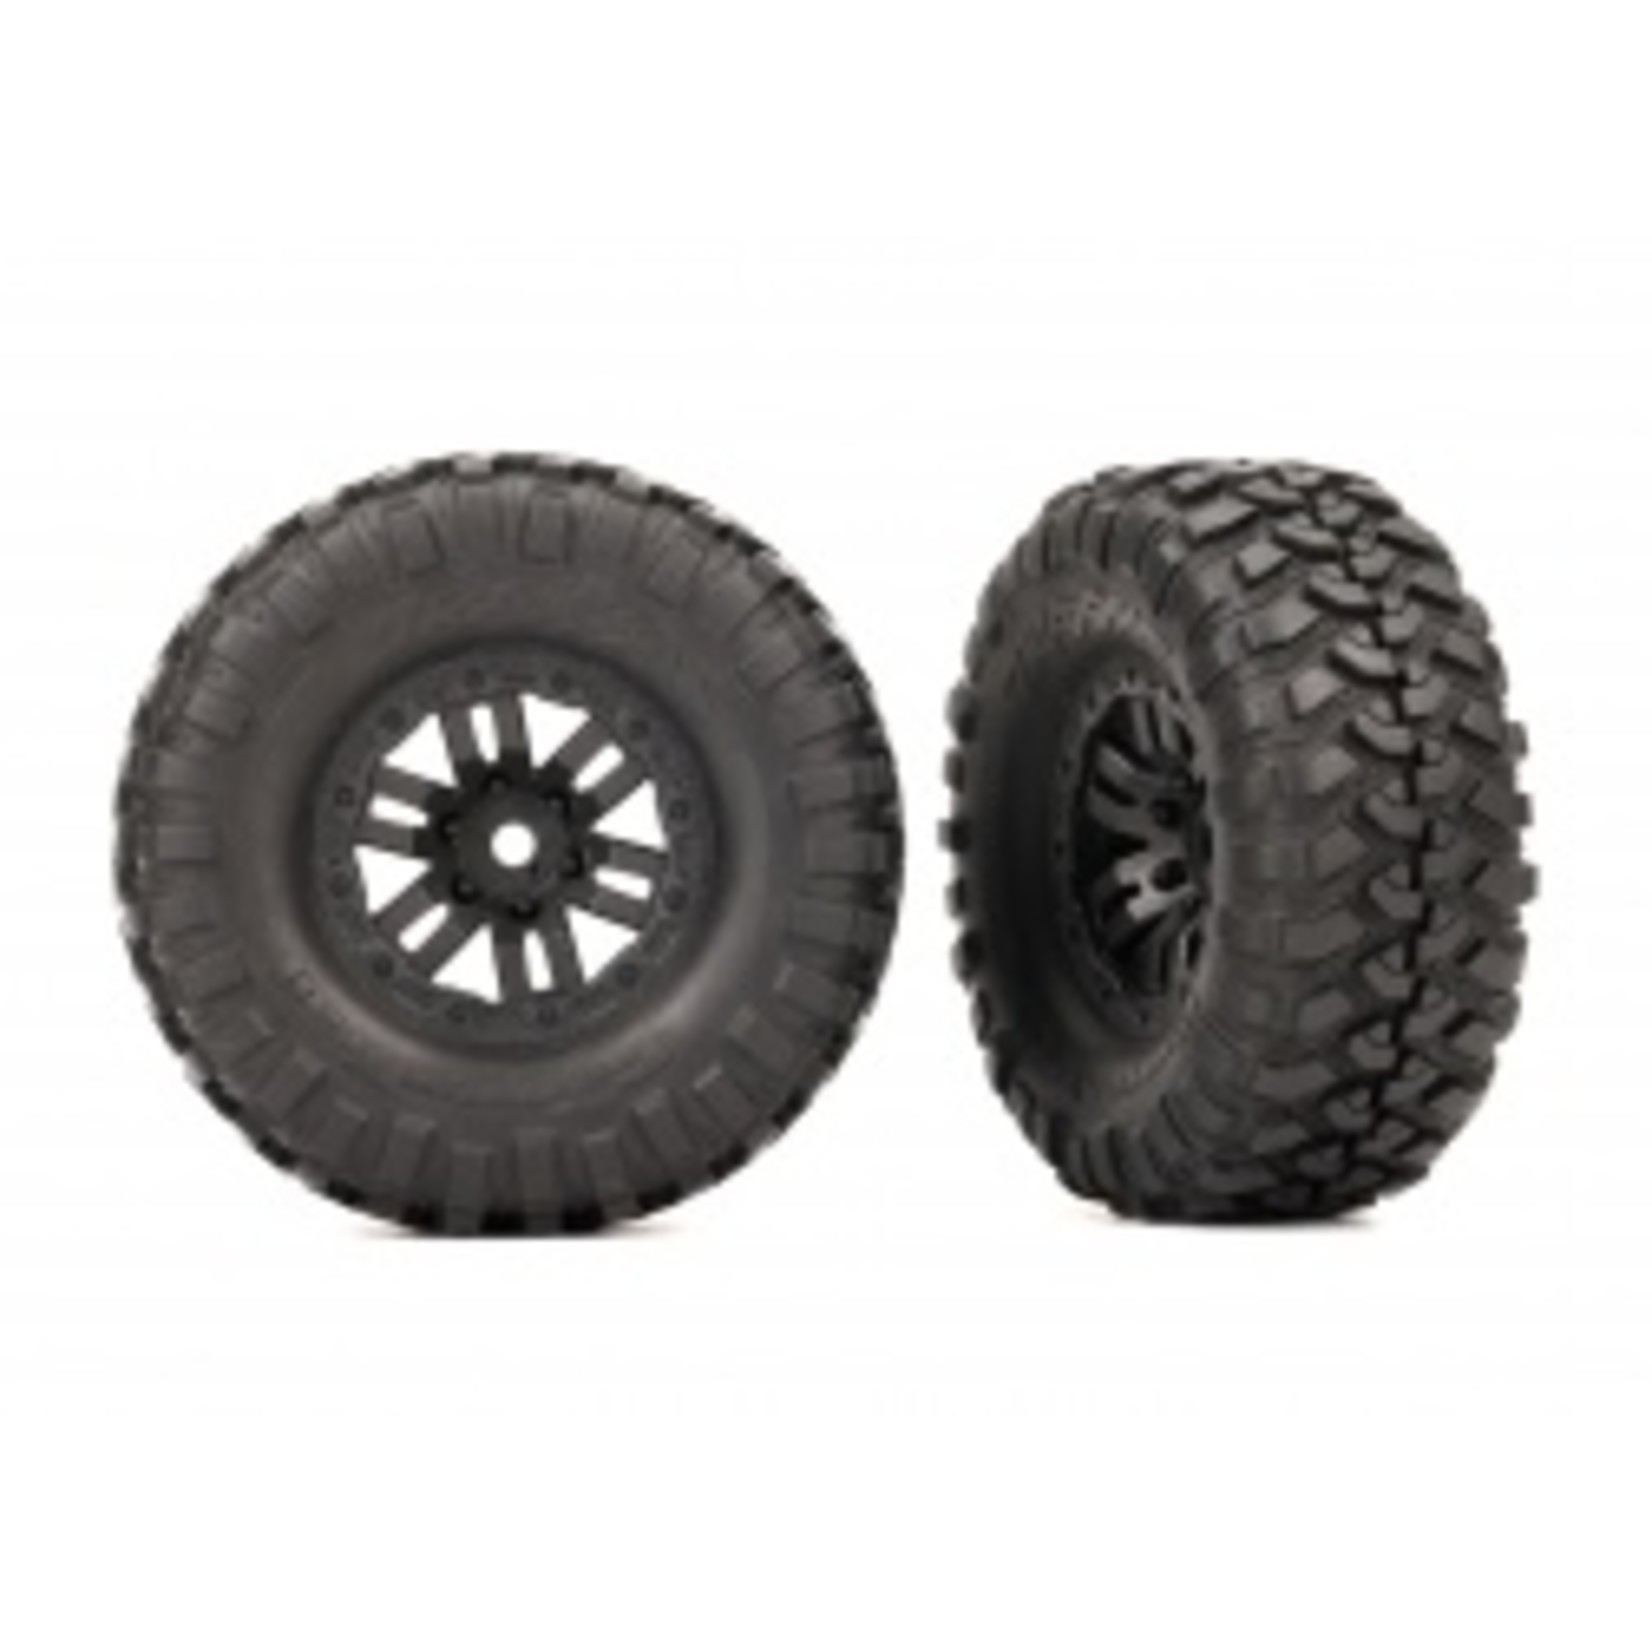 Traxxas 9773  Tires & wheels, assembled (black 1.0" wheels, Canyon Trail 2.2x1.0" tires) (2)